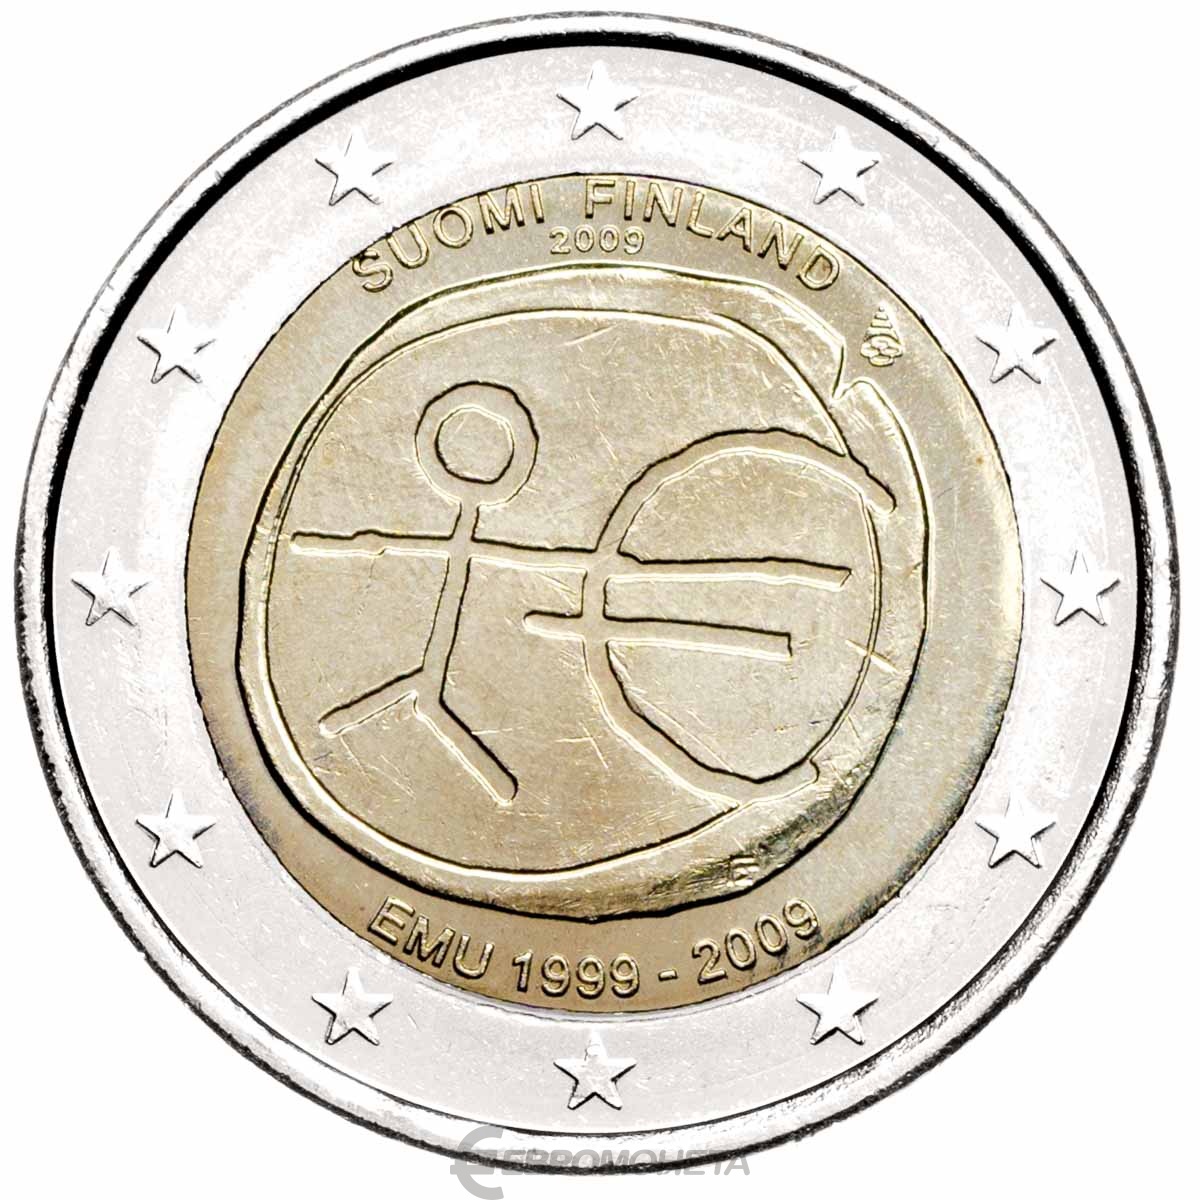 2 Евро Финляндия. Евро Финляндия монеты фото. 2 Евро 2016 г. Словакия. Председательство в ЕС. UNC. Памятные монеты евро